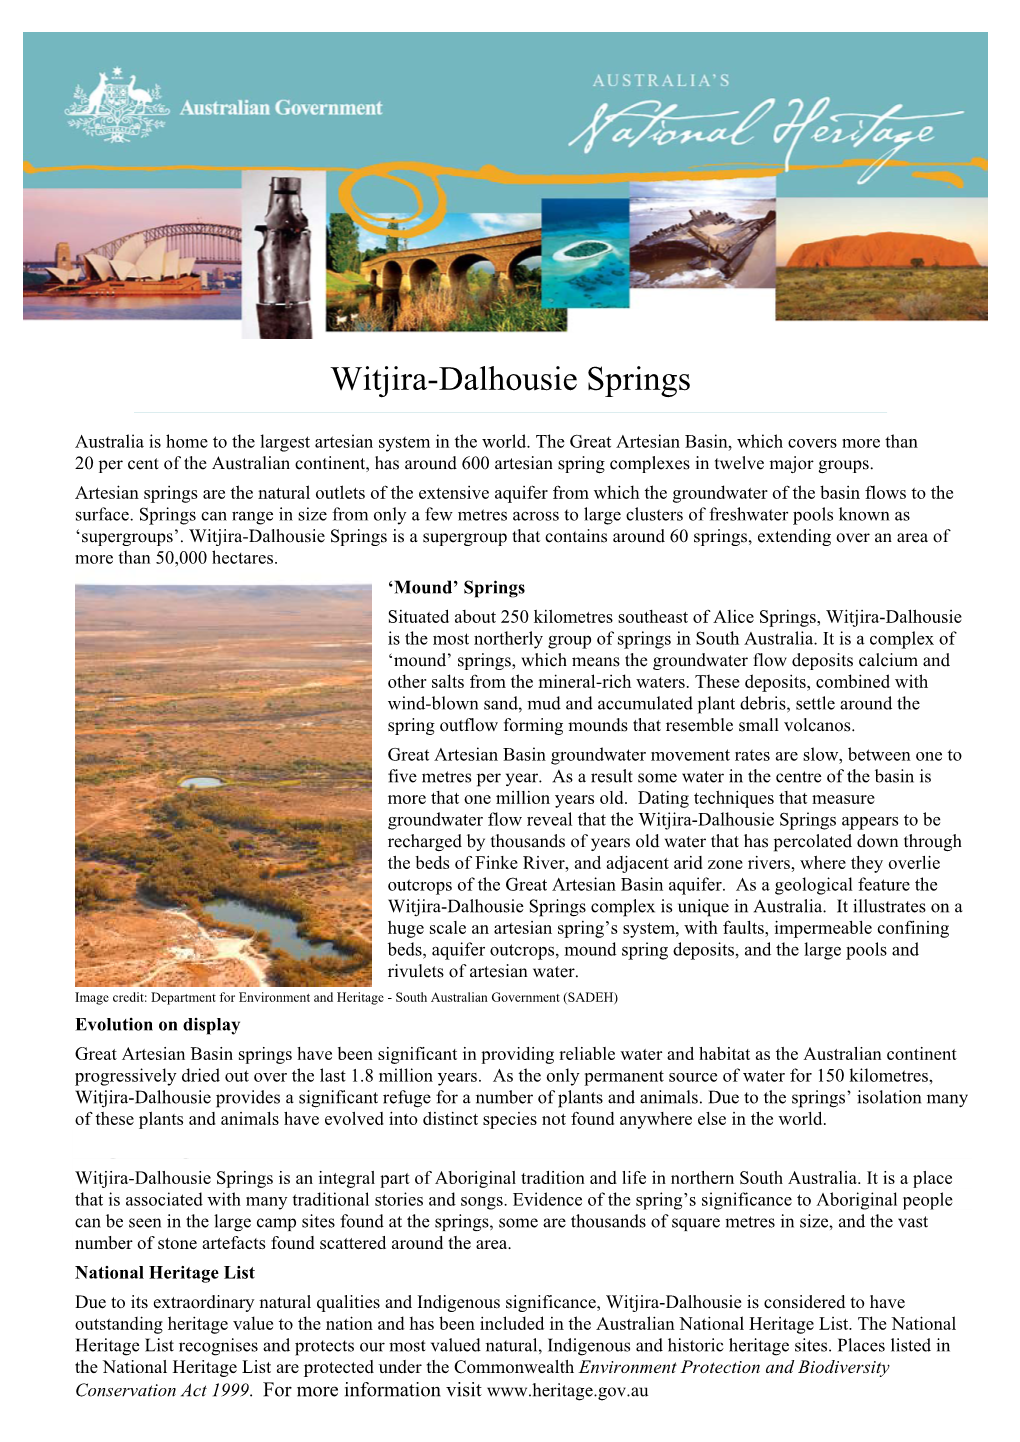 Witjira-Dalhousie Springs